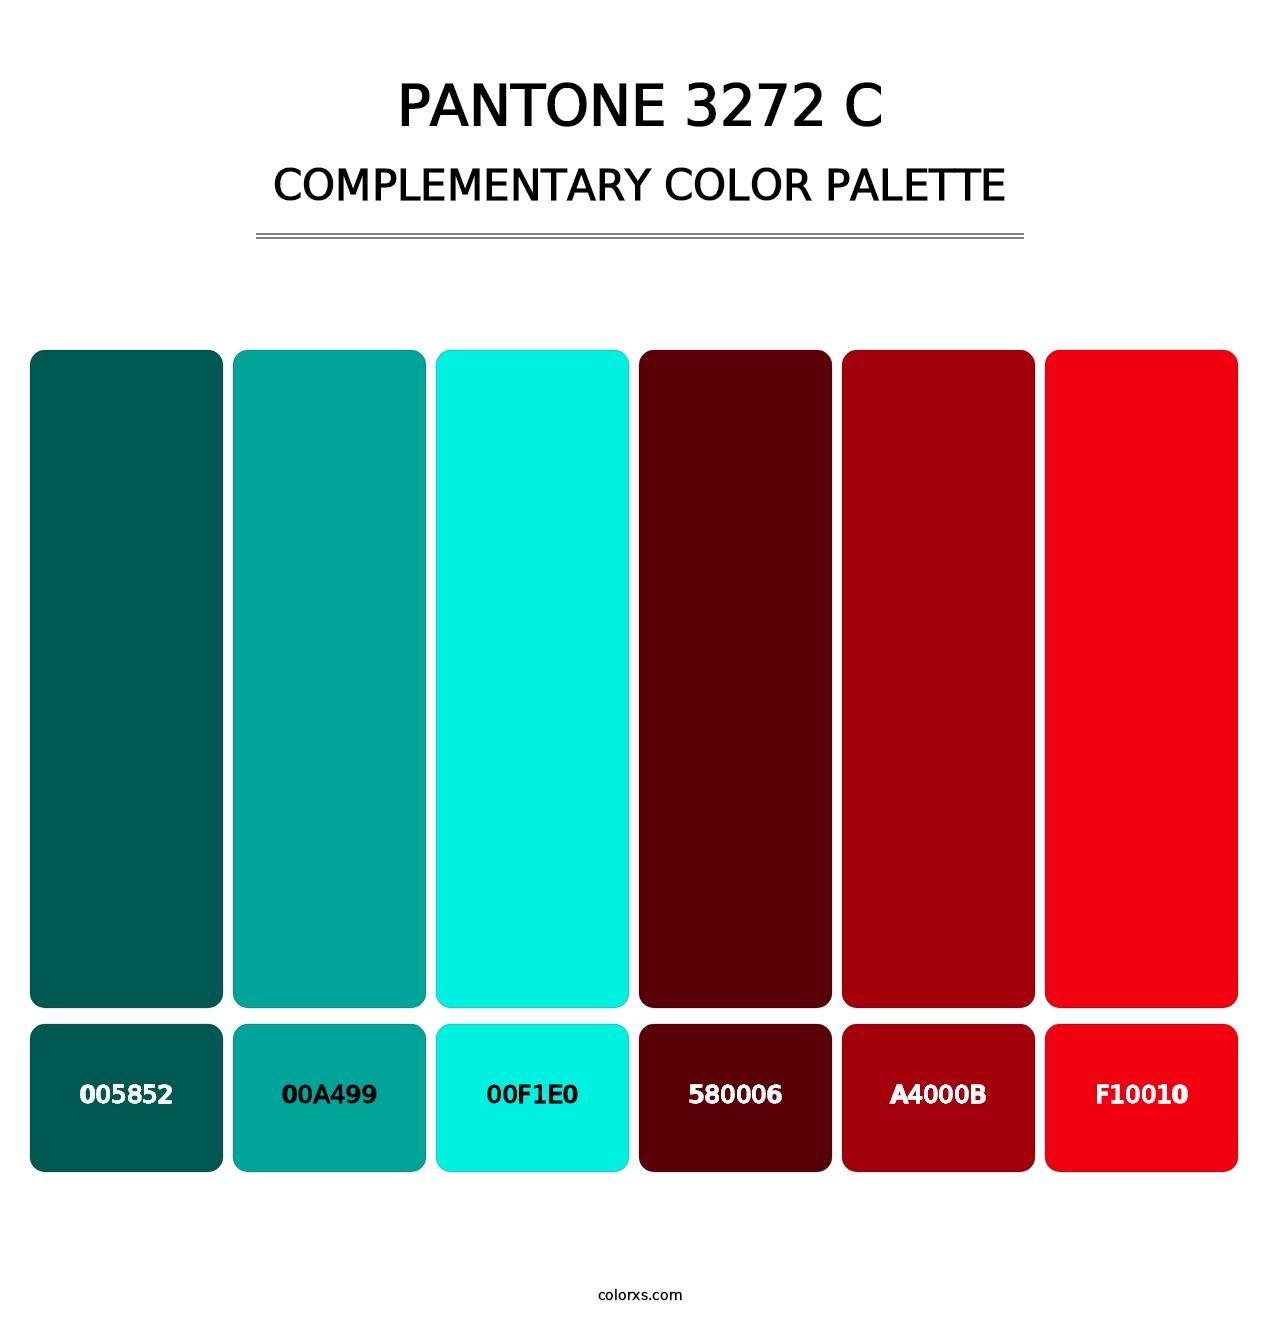 PANTONE 3272 C - Complementary Color Palette